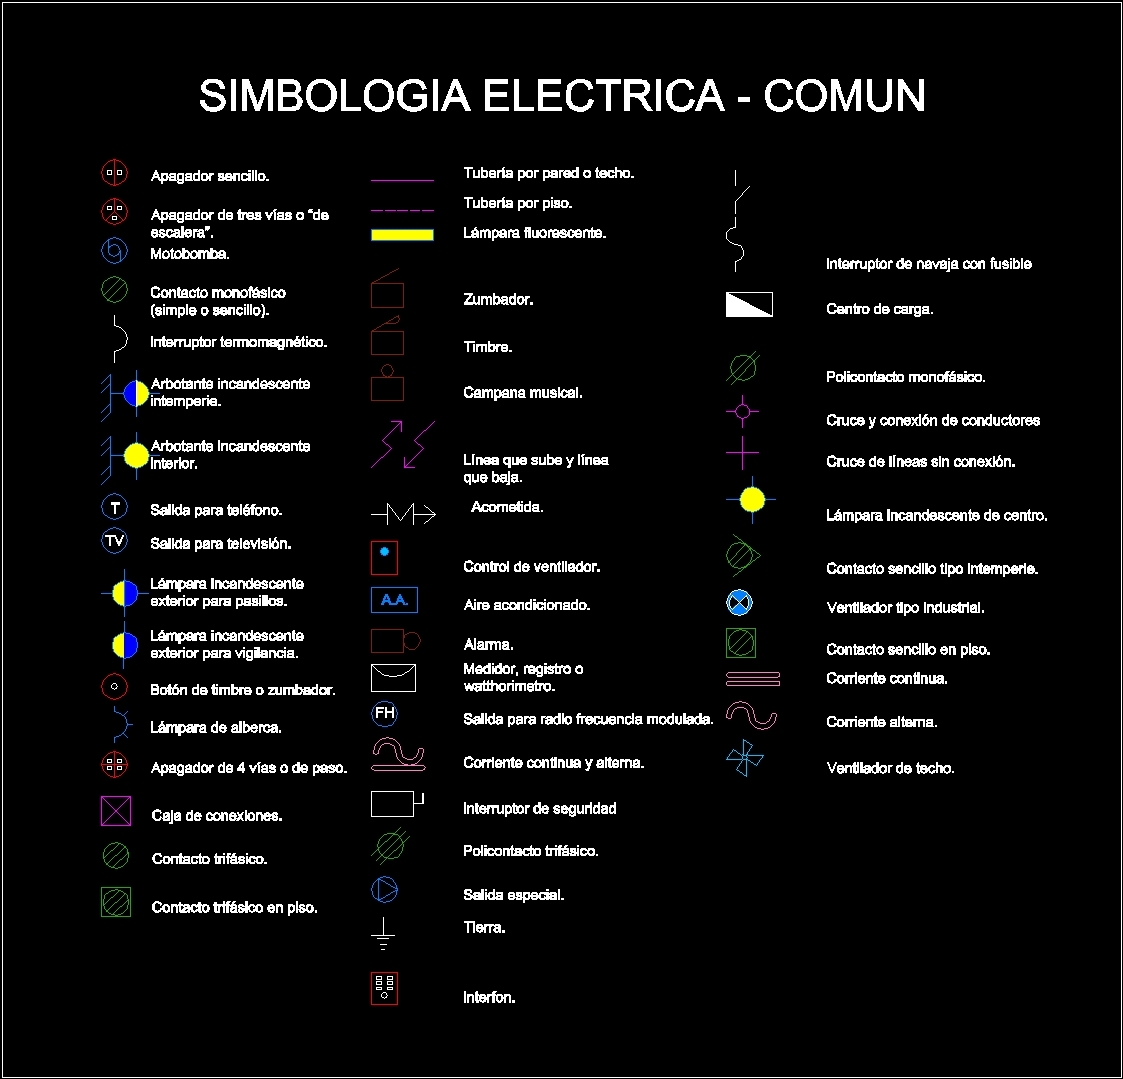 Autocad electrical symbols dwg free download - mazenglish